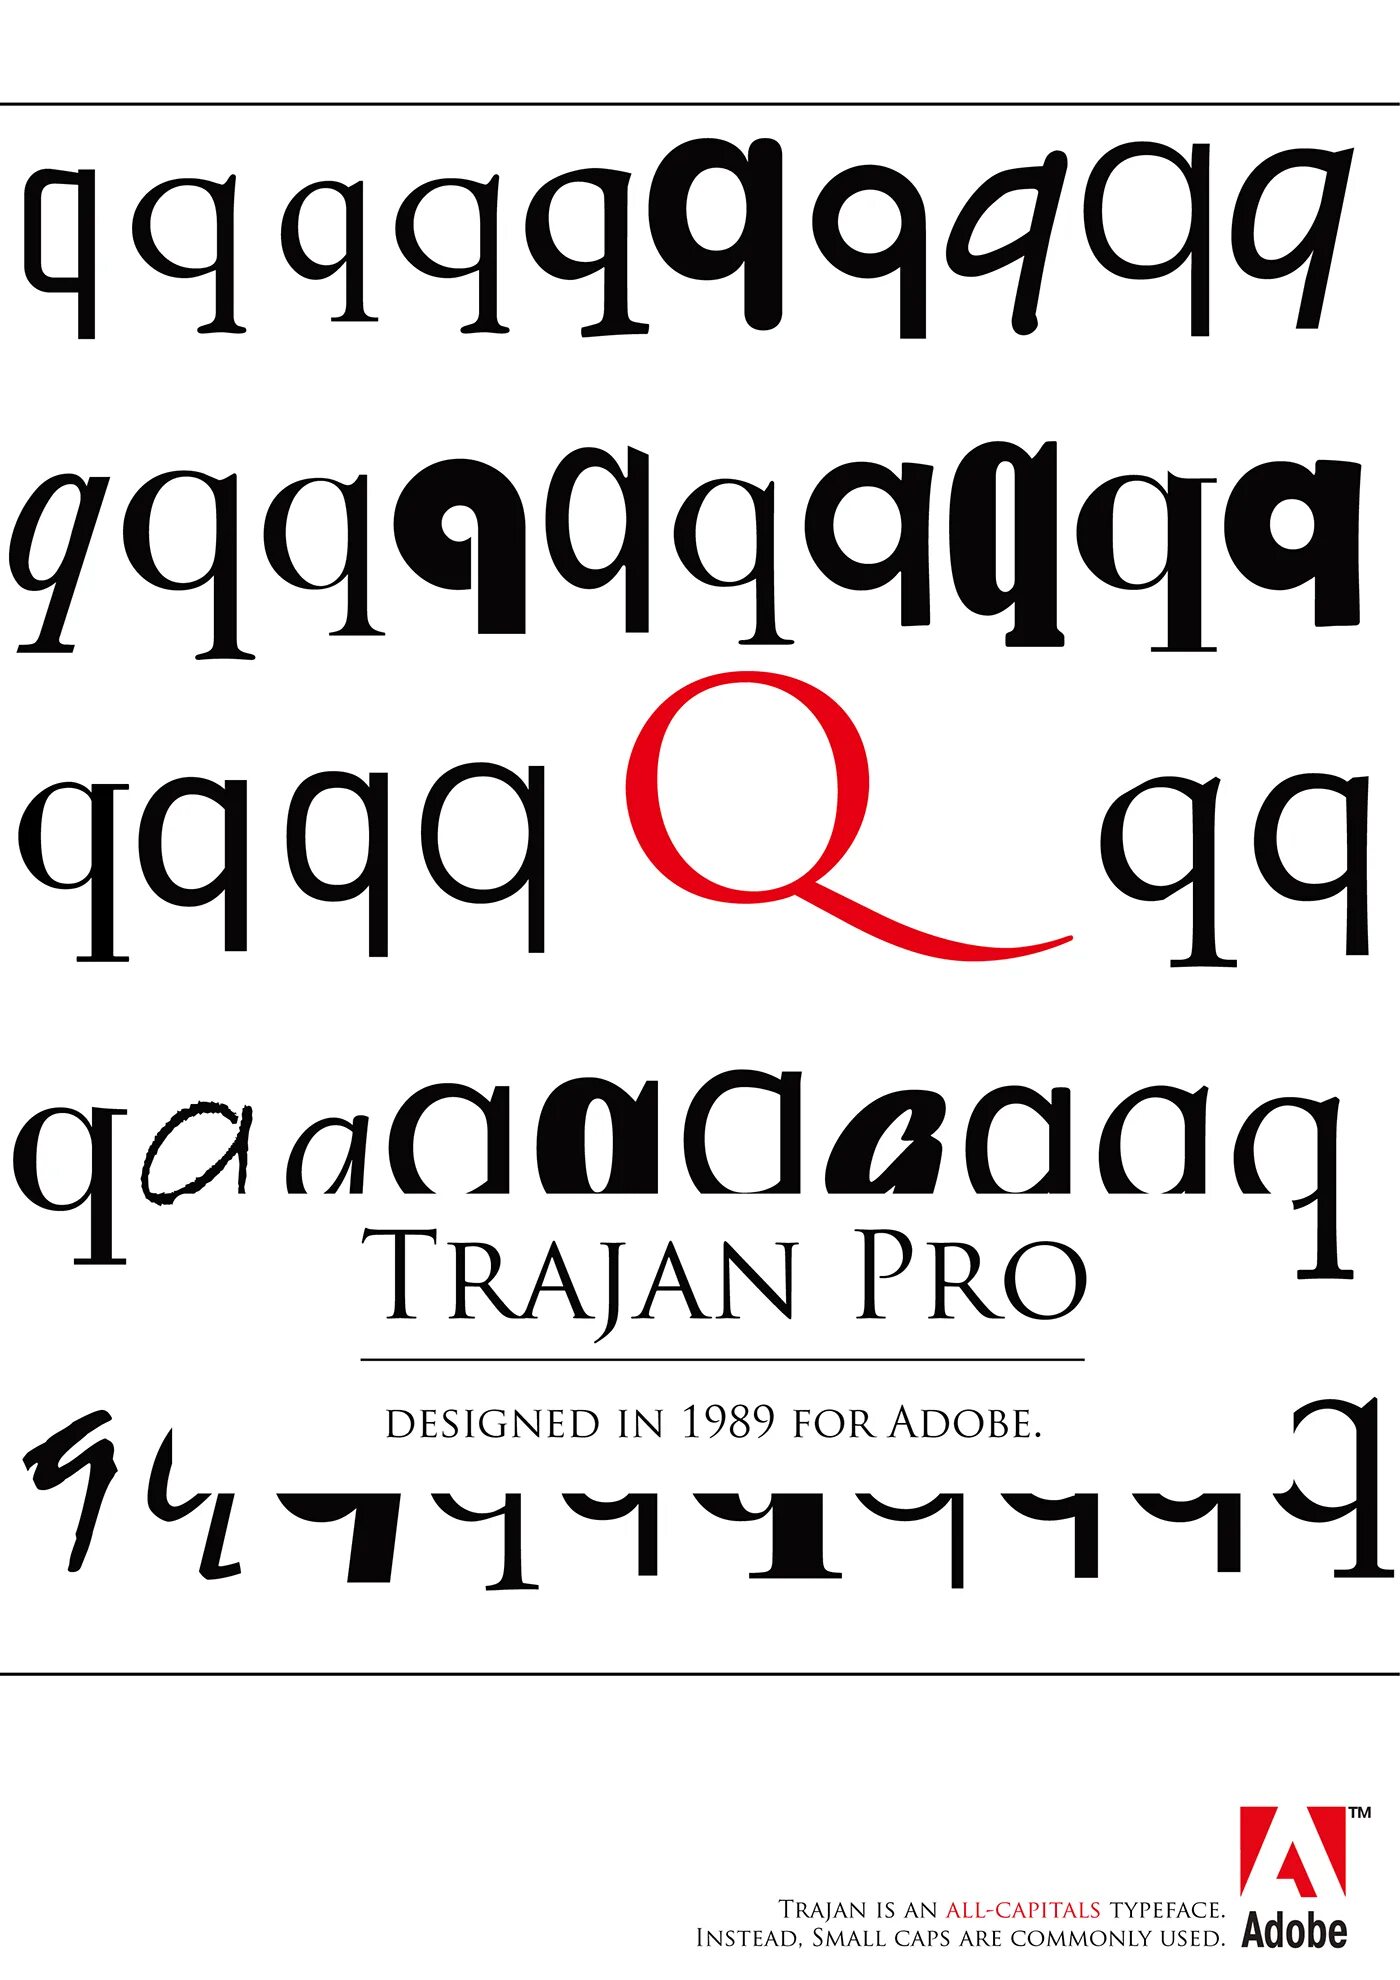 Шрифт Trajan. Trajan Pro font. Trajan (typeface). Trajan Color шрифт.